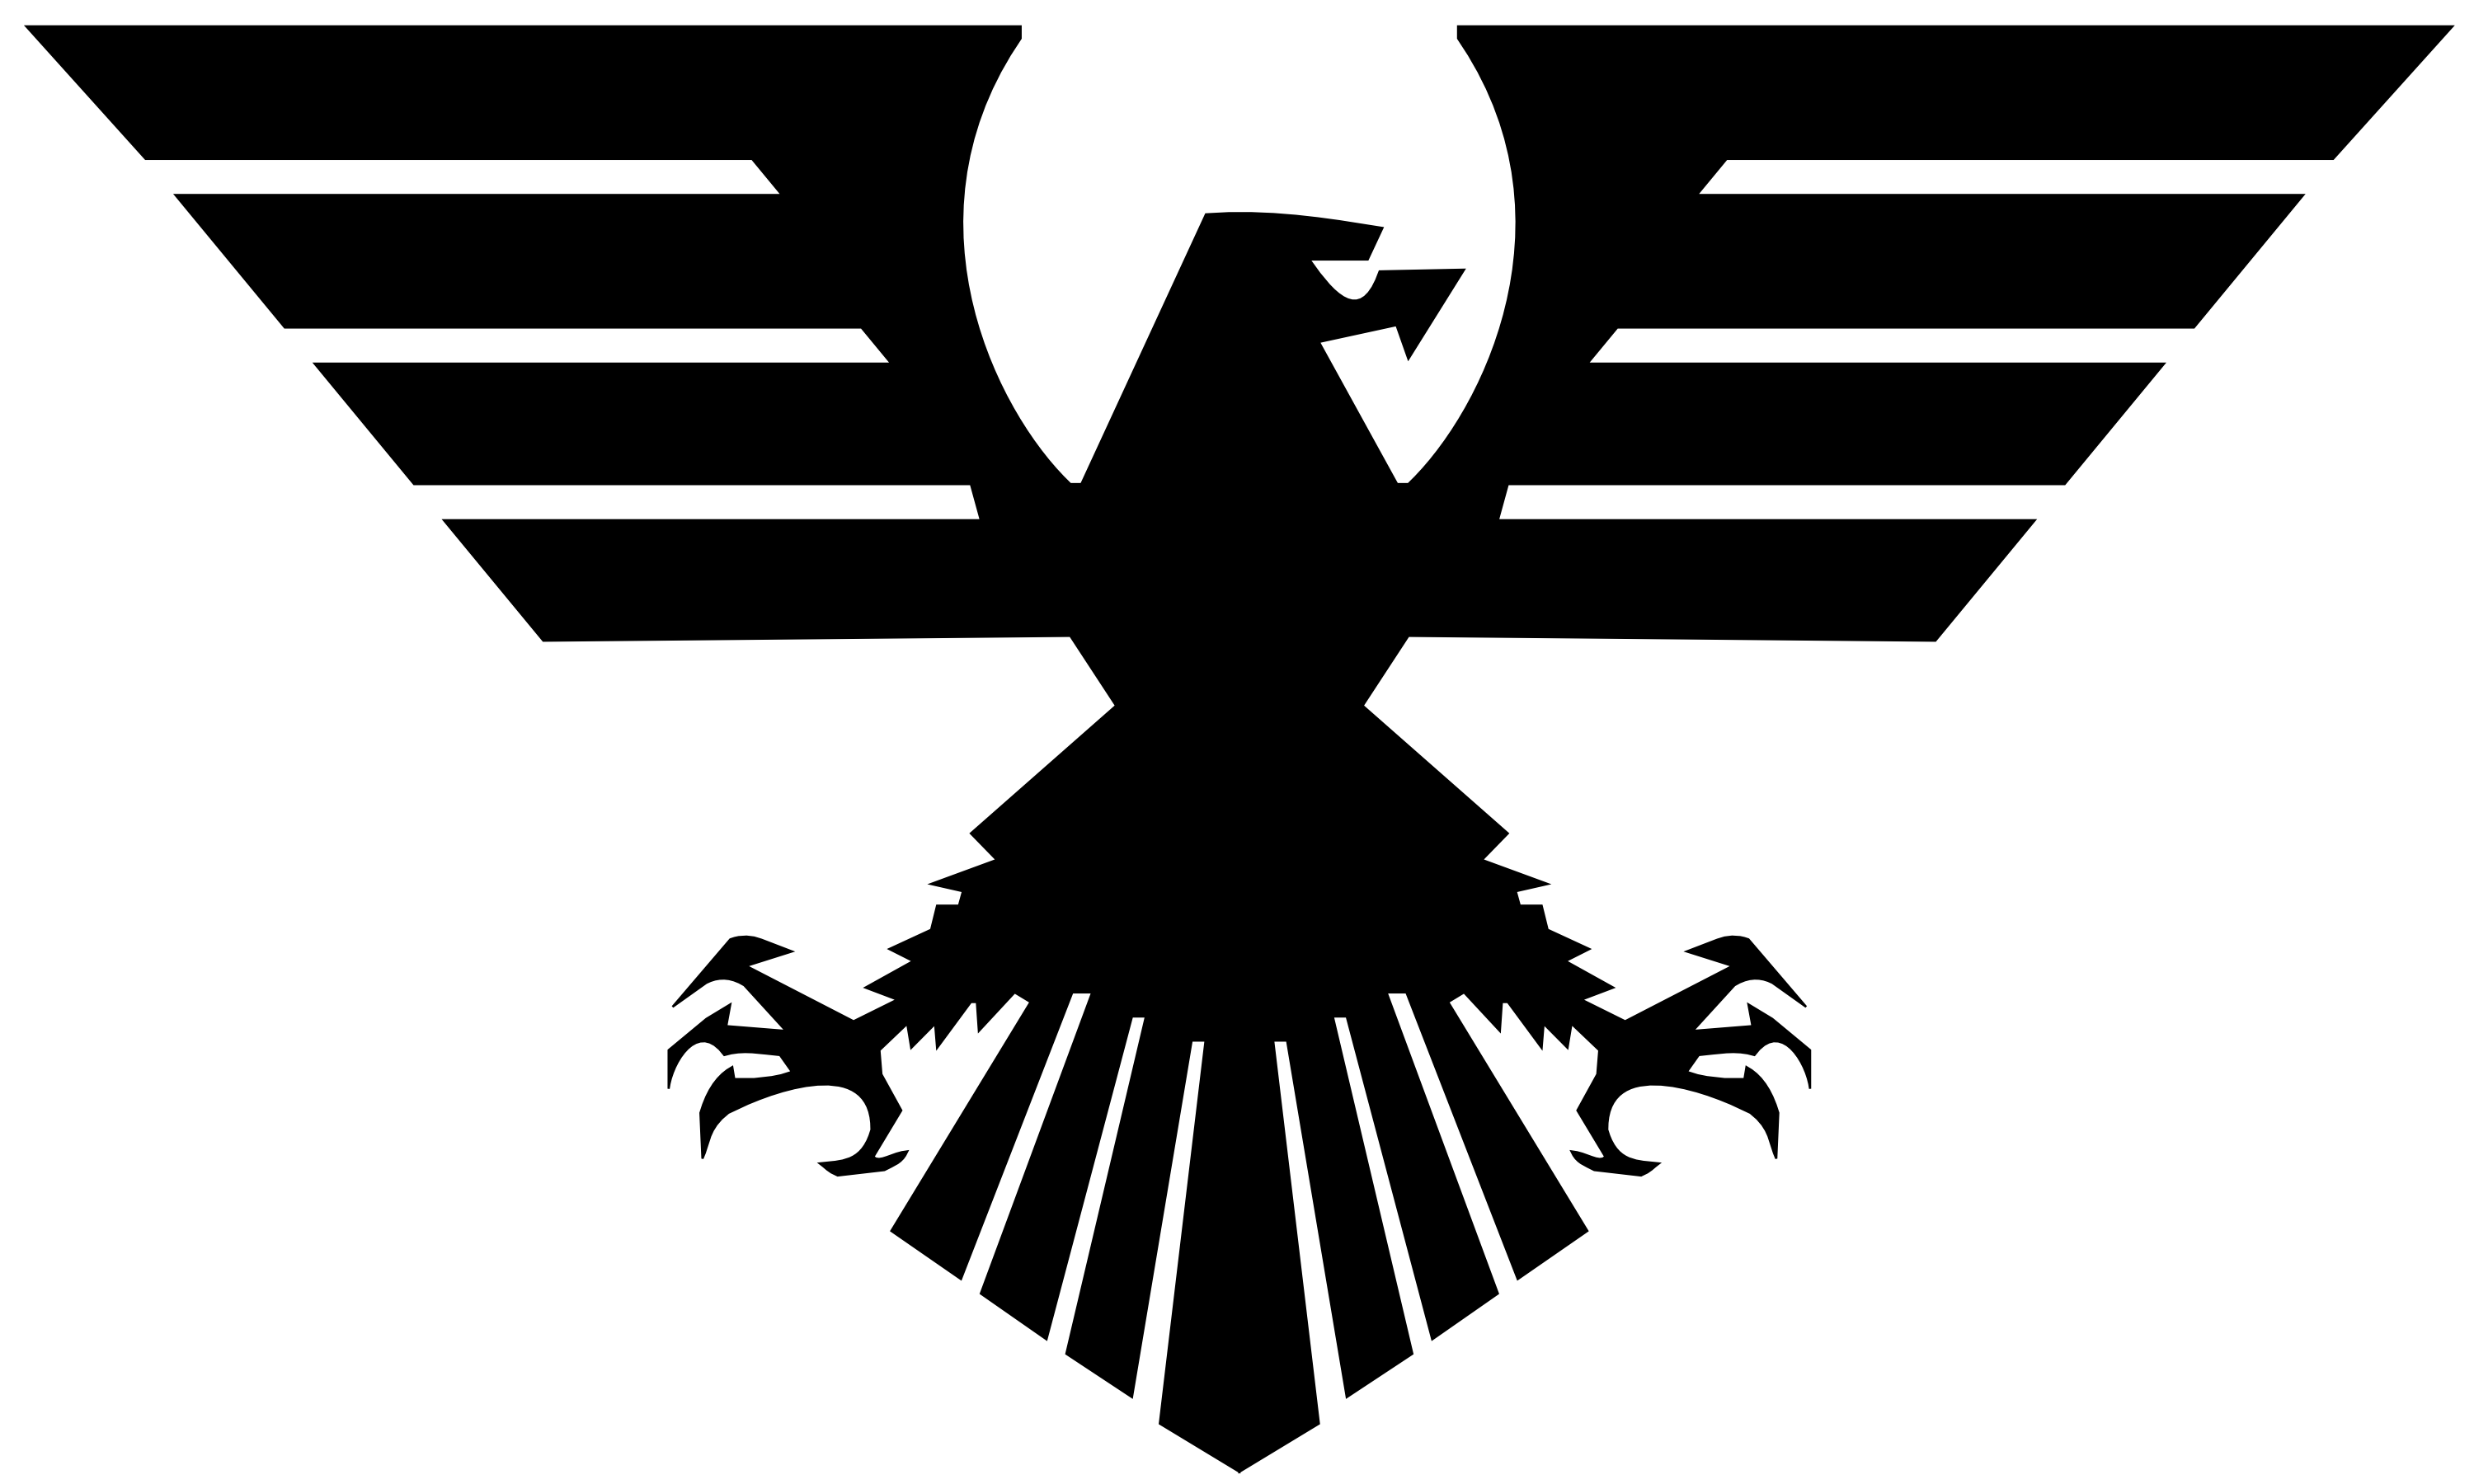 Black and White Eagle Logo - Eagle Png Logo - Free Transparent PNG Logos